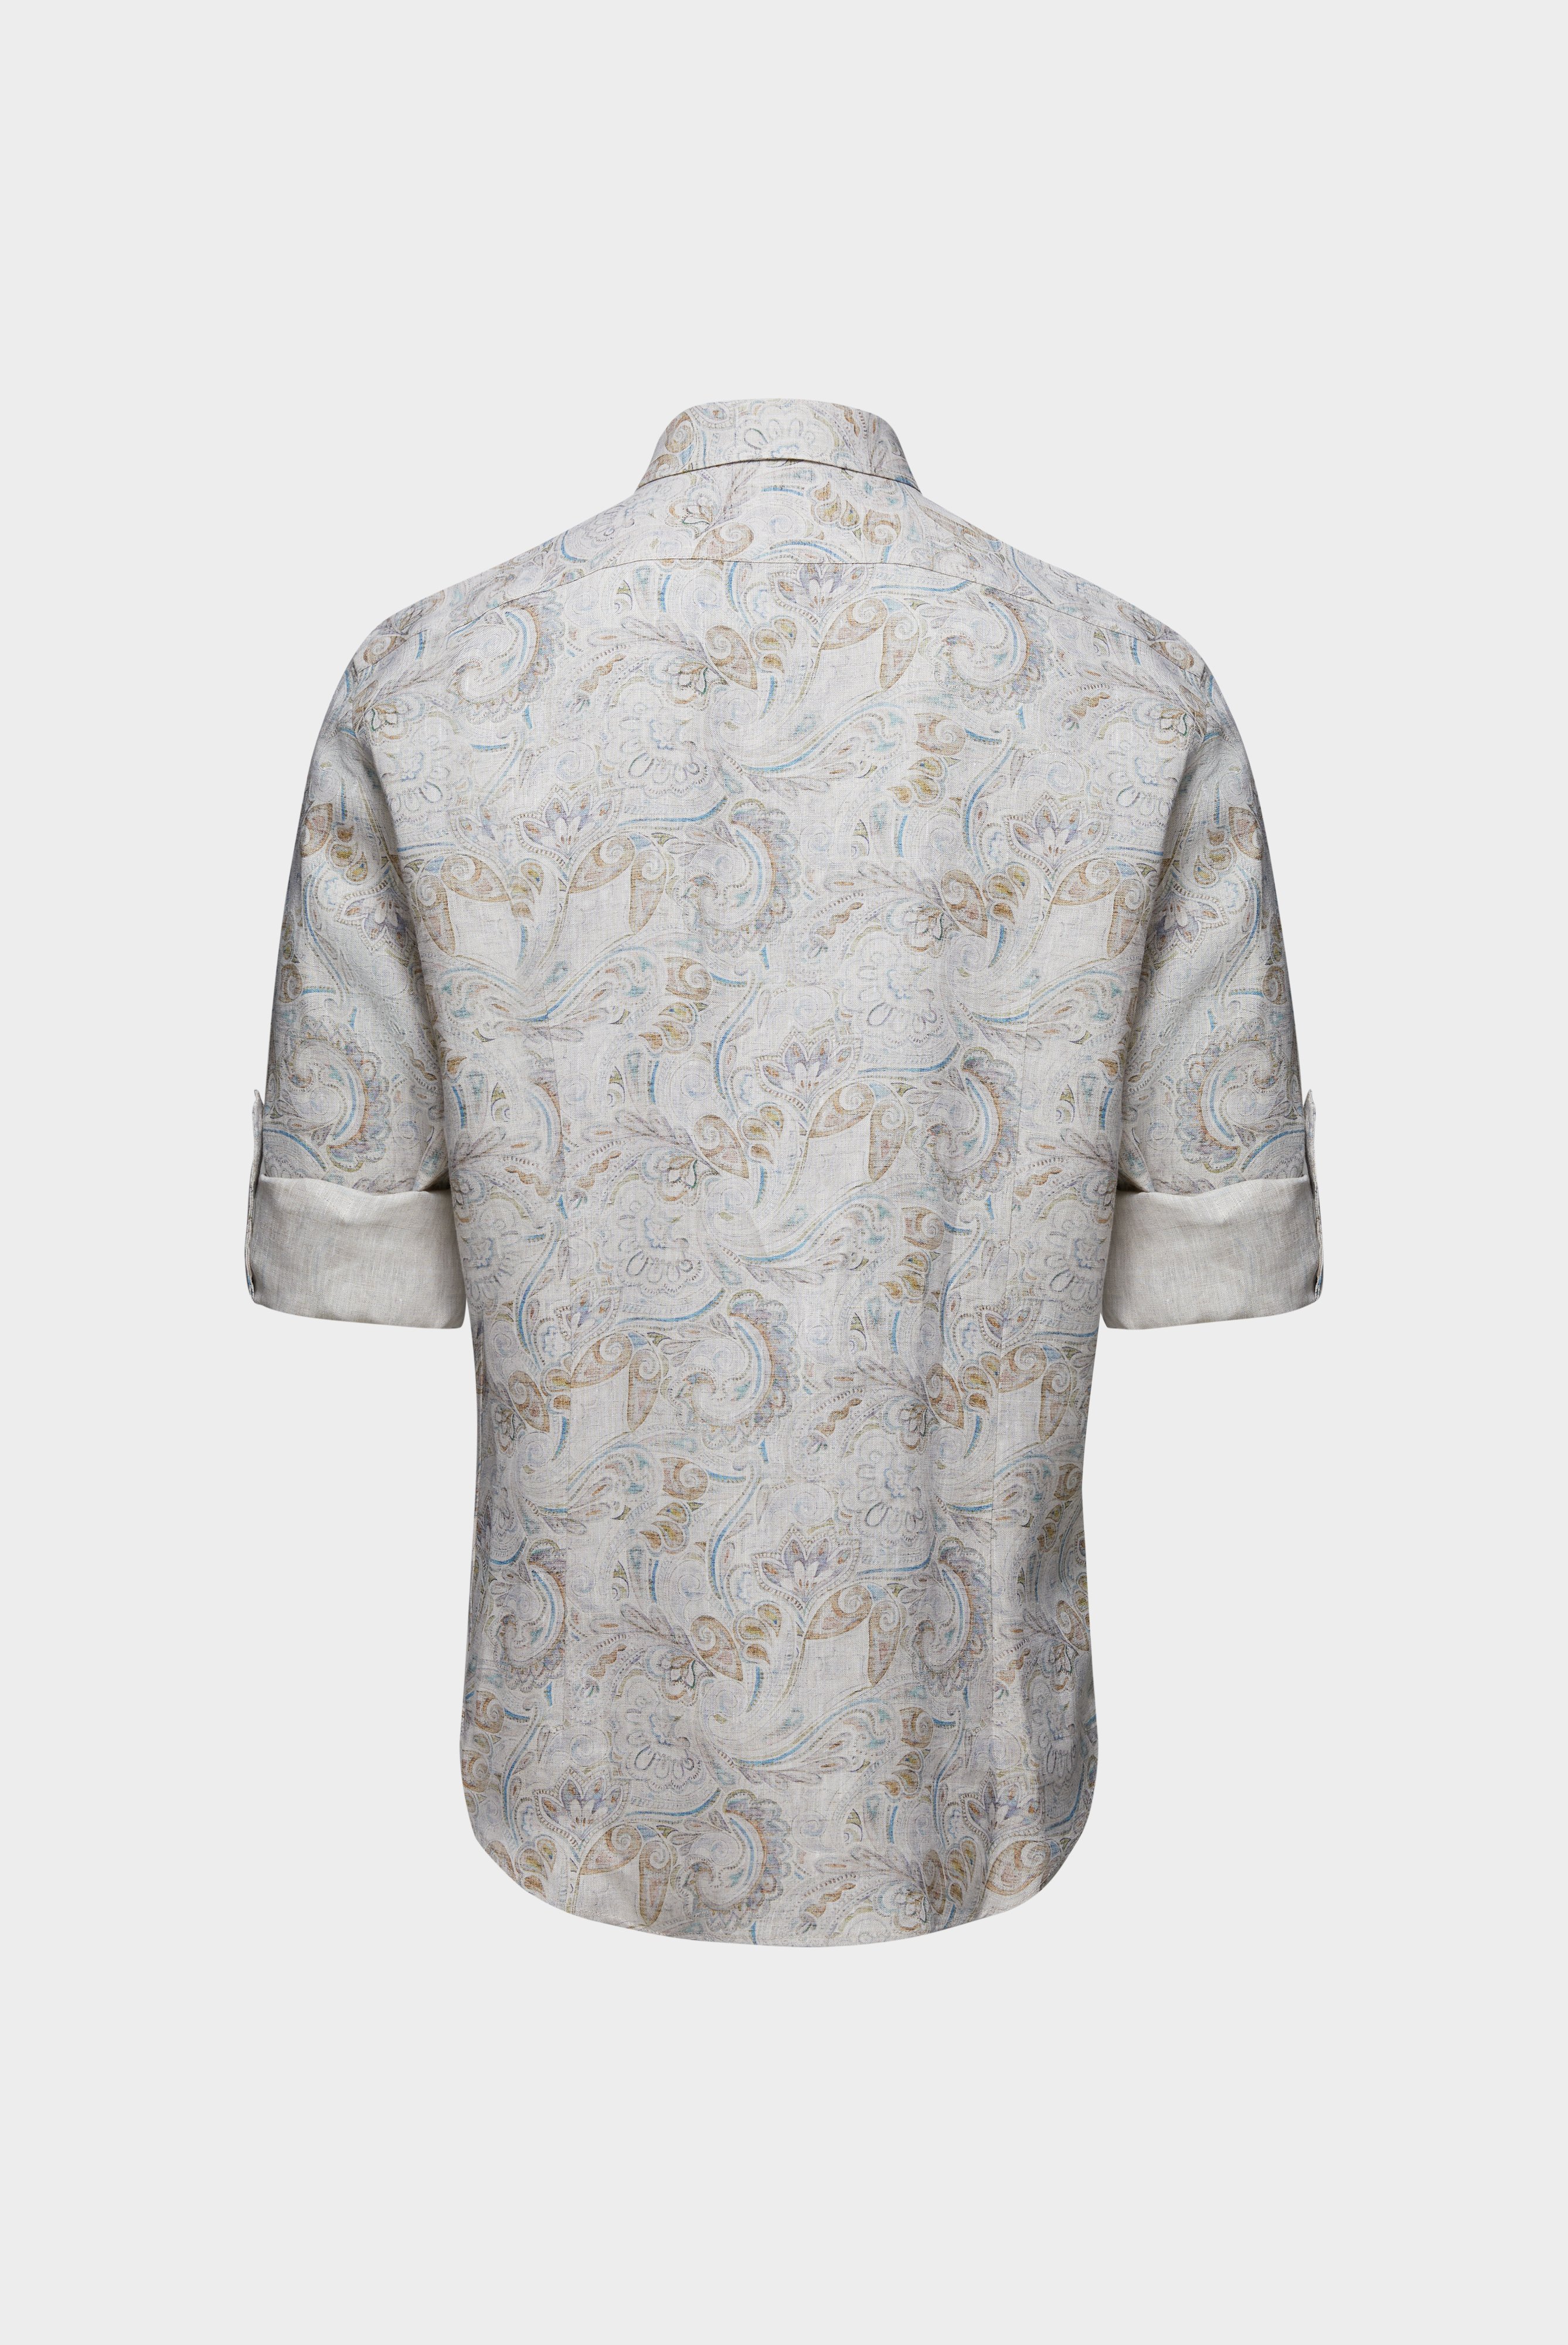 Casual Hemden+Leinenhemd mit Paisley-Druck Tailor Fit+20.2013.C4.172036.118.40